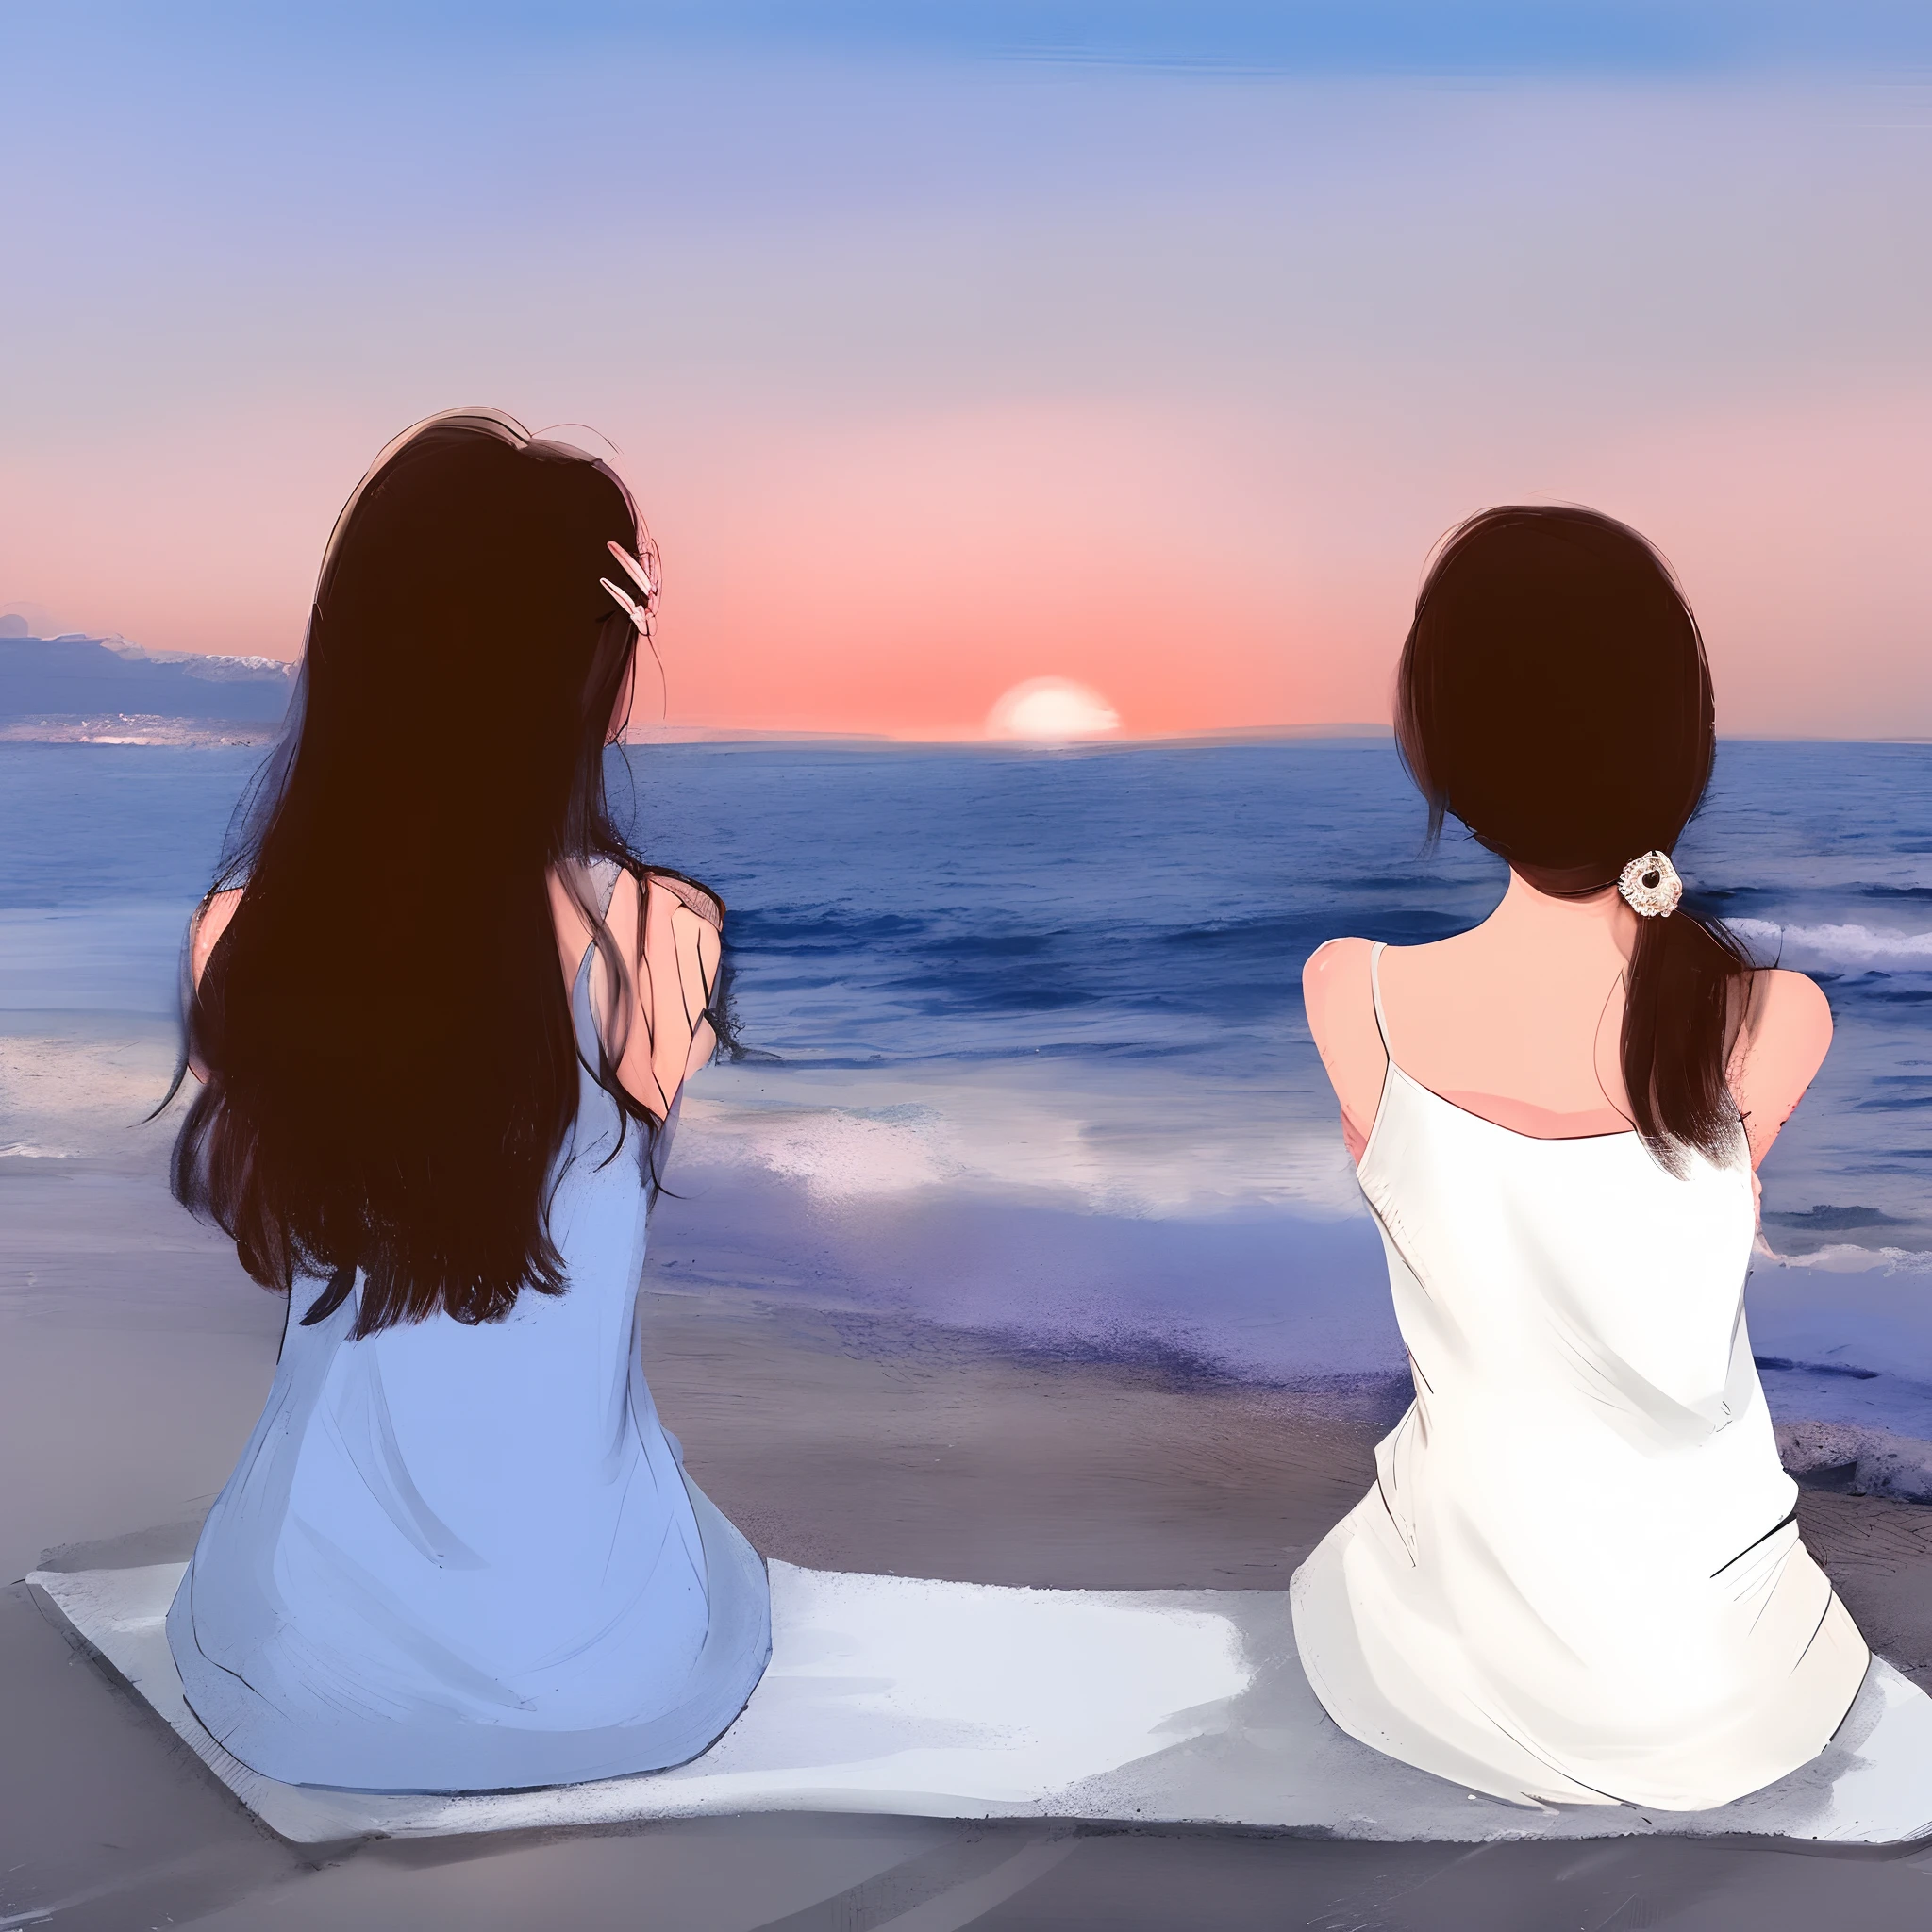 Two women sitting on the beach 看日落, 朋友的美麗畫作, 伴隨著夕陽, 看日落, 看著太陽下山. 日本漫畫, 在日落時的海灘, 在日落的海灘上, 看日落, 伴隨著夕陽, 坐在海灘上, 兩個女孩, 在日落時分的海灘上, 數位藝術圖片, 日落時在海灘上